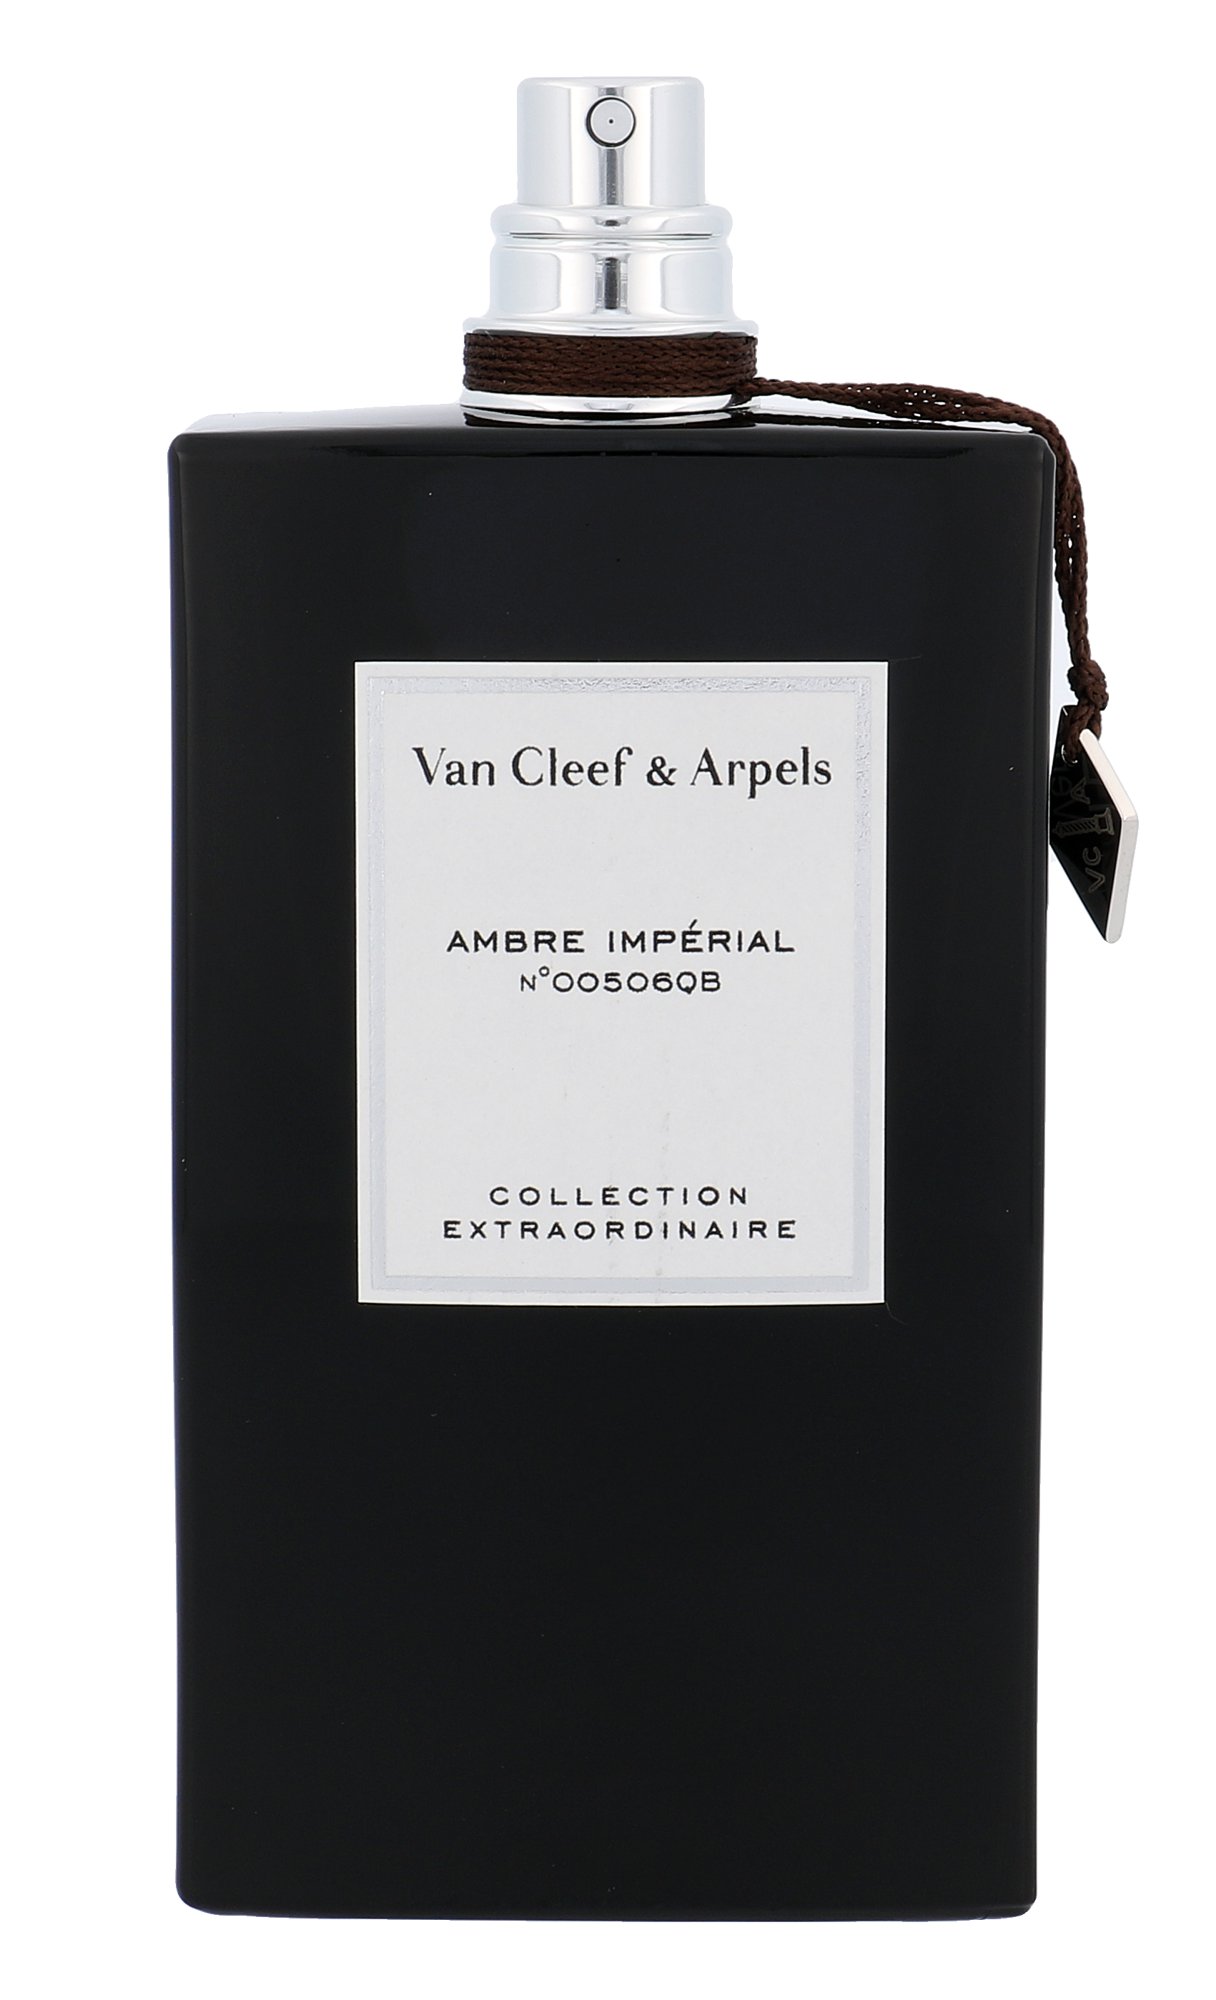 Van Cleef & Arpels Collection Extraordinaire Ambre Imperial, edp 75ml